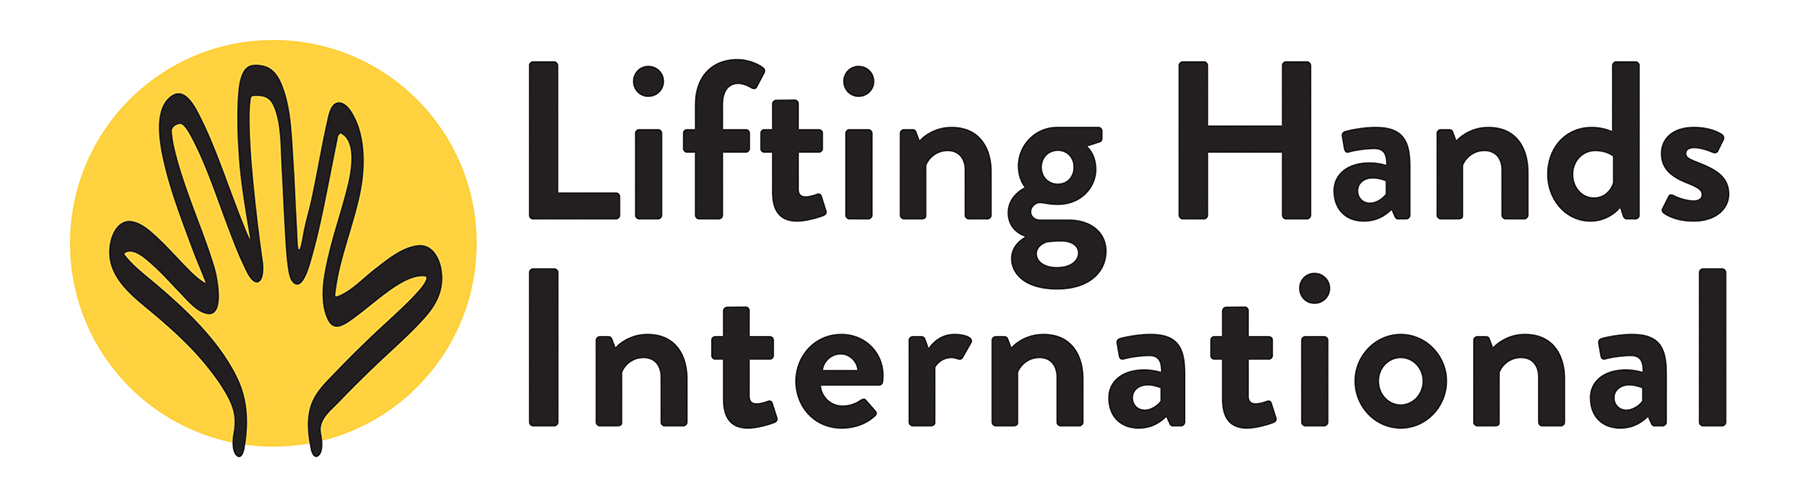 Lifting Hands International — Media Kit